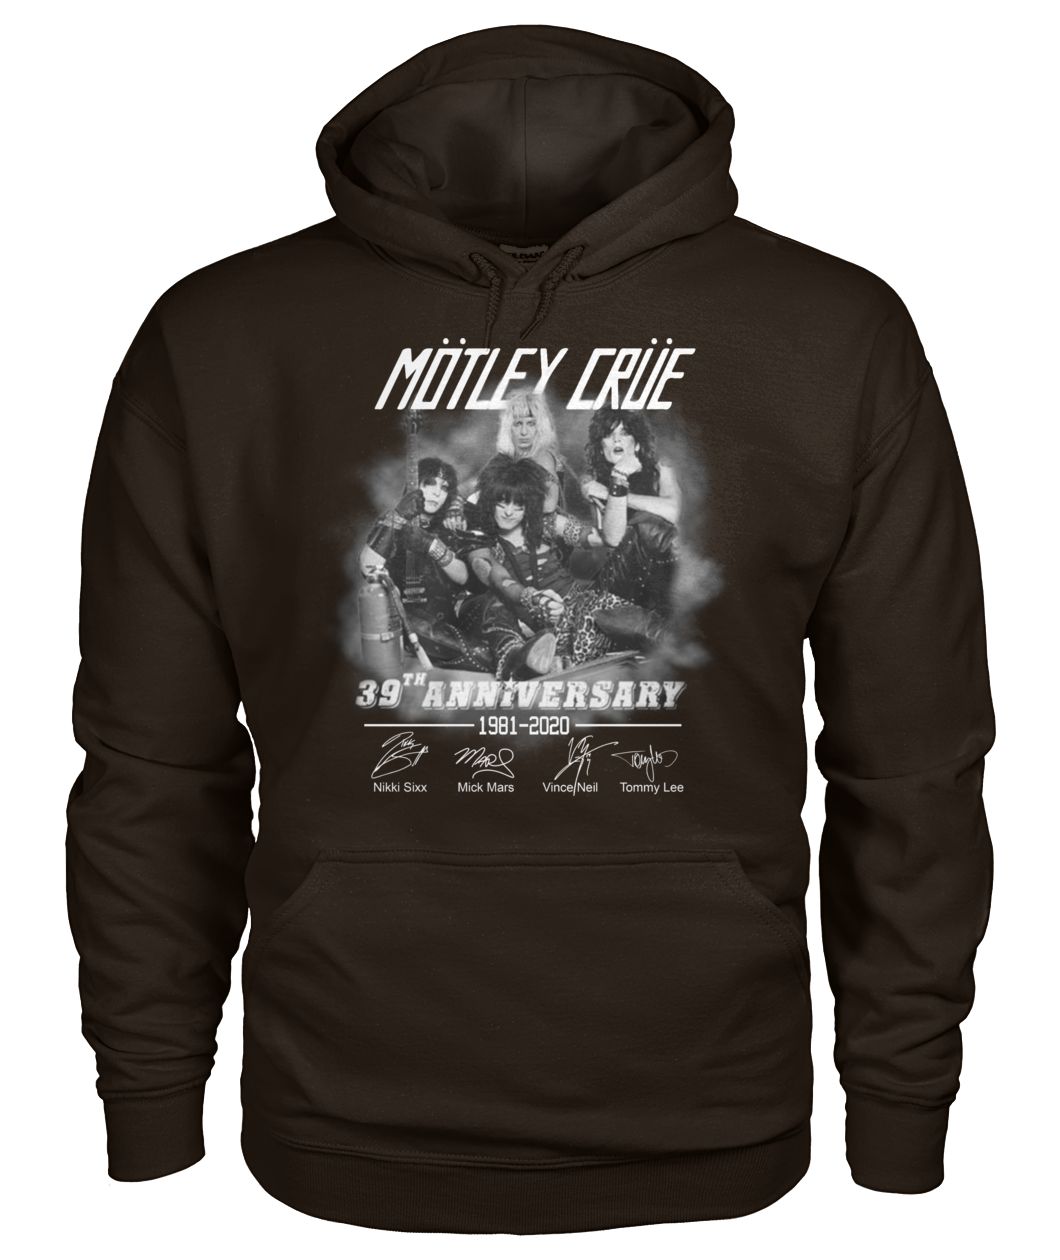 Motley crue 39th anniversary 1981-2020 signatures gildan hoodie